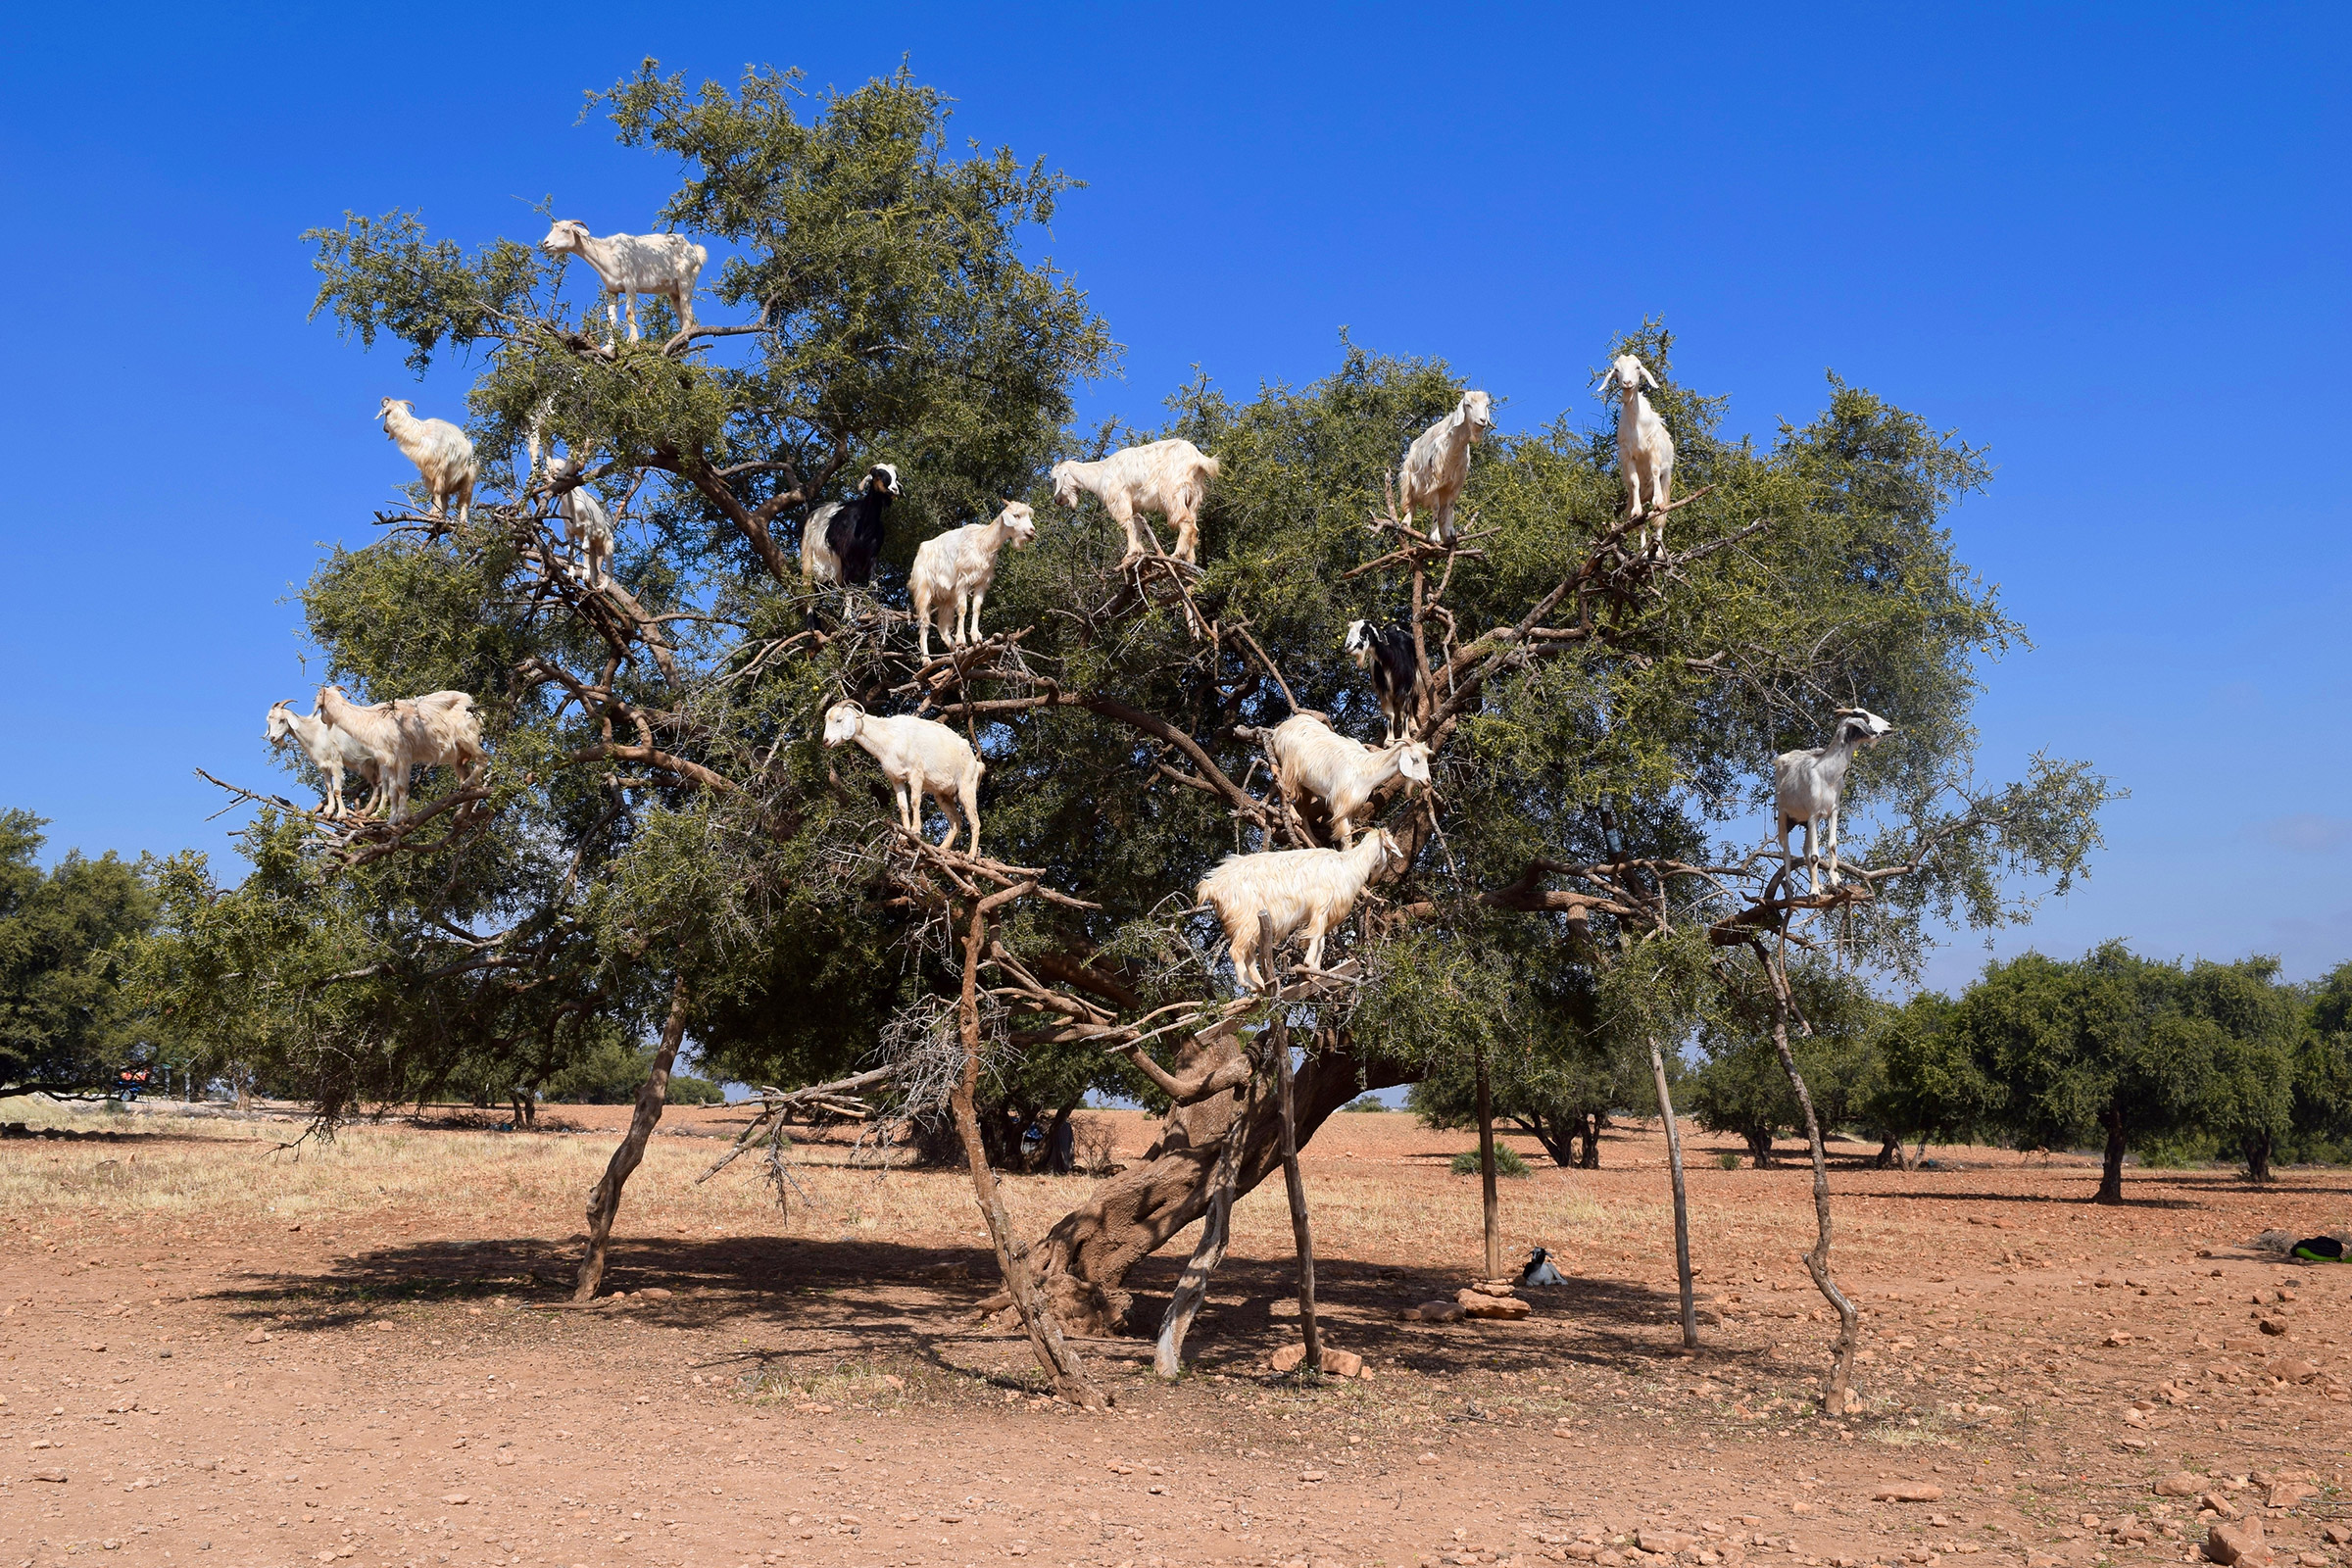 Morocco Goats In An Argan Tree